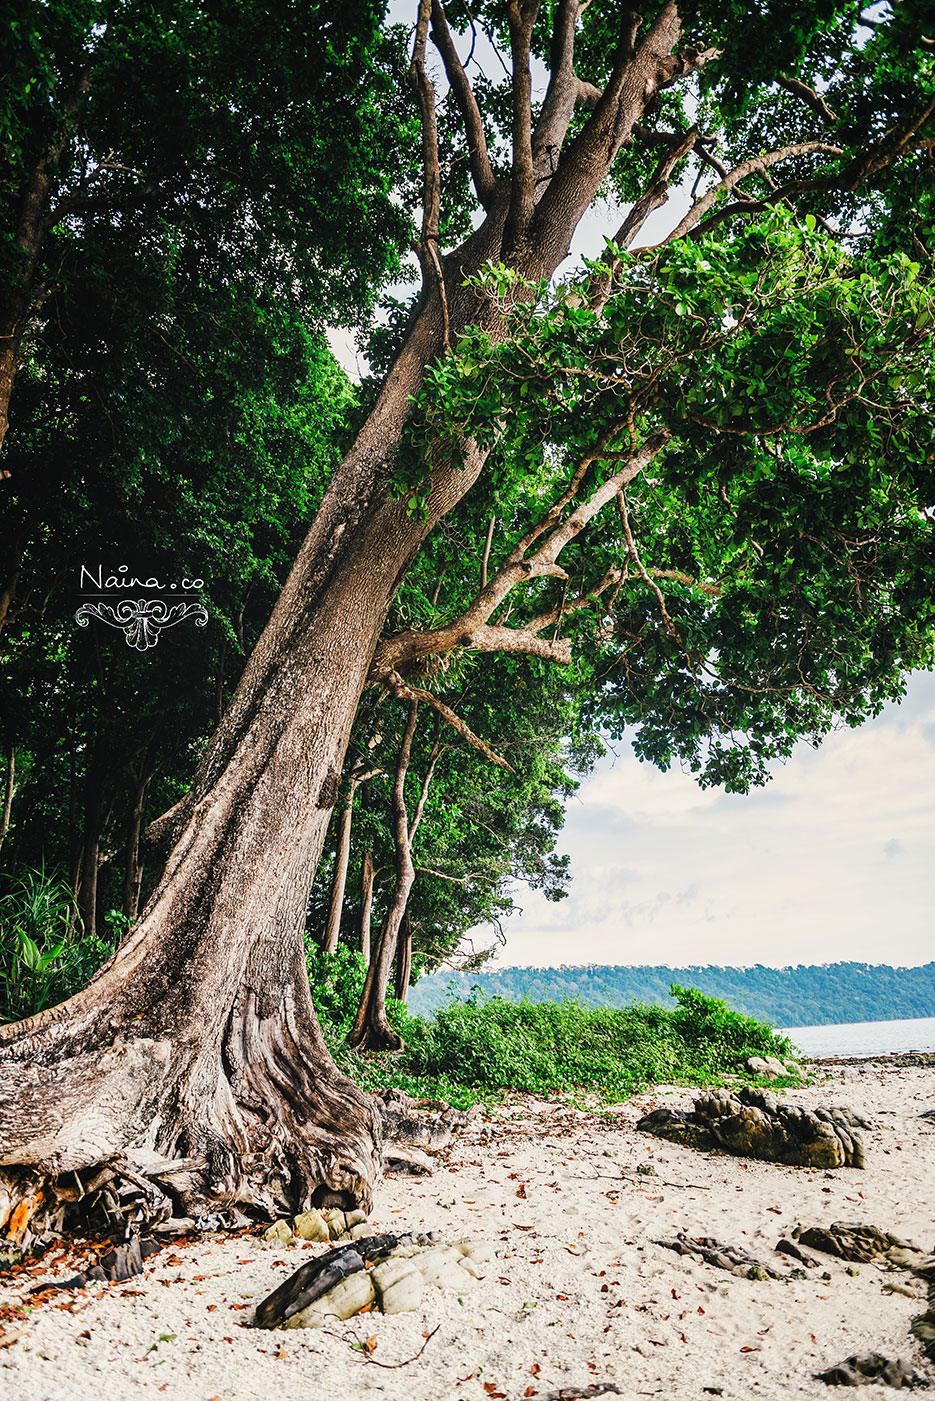 Andaman Islands, Havelock, Barefoot Resort vacation and travel photography as captured by photographer Naina Redhu.